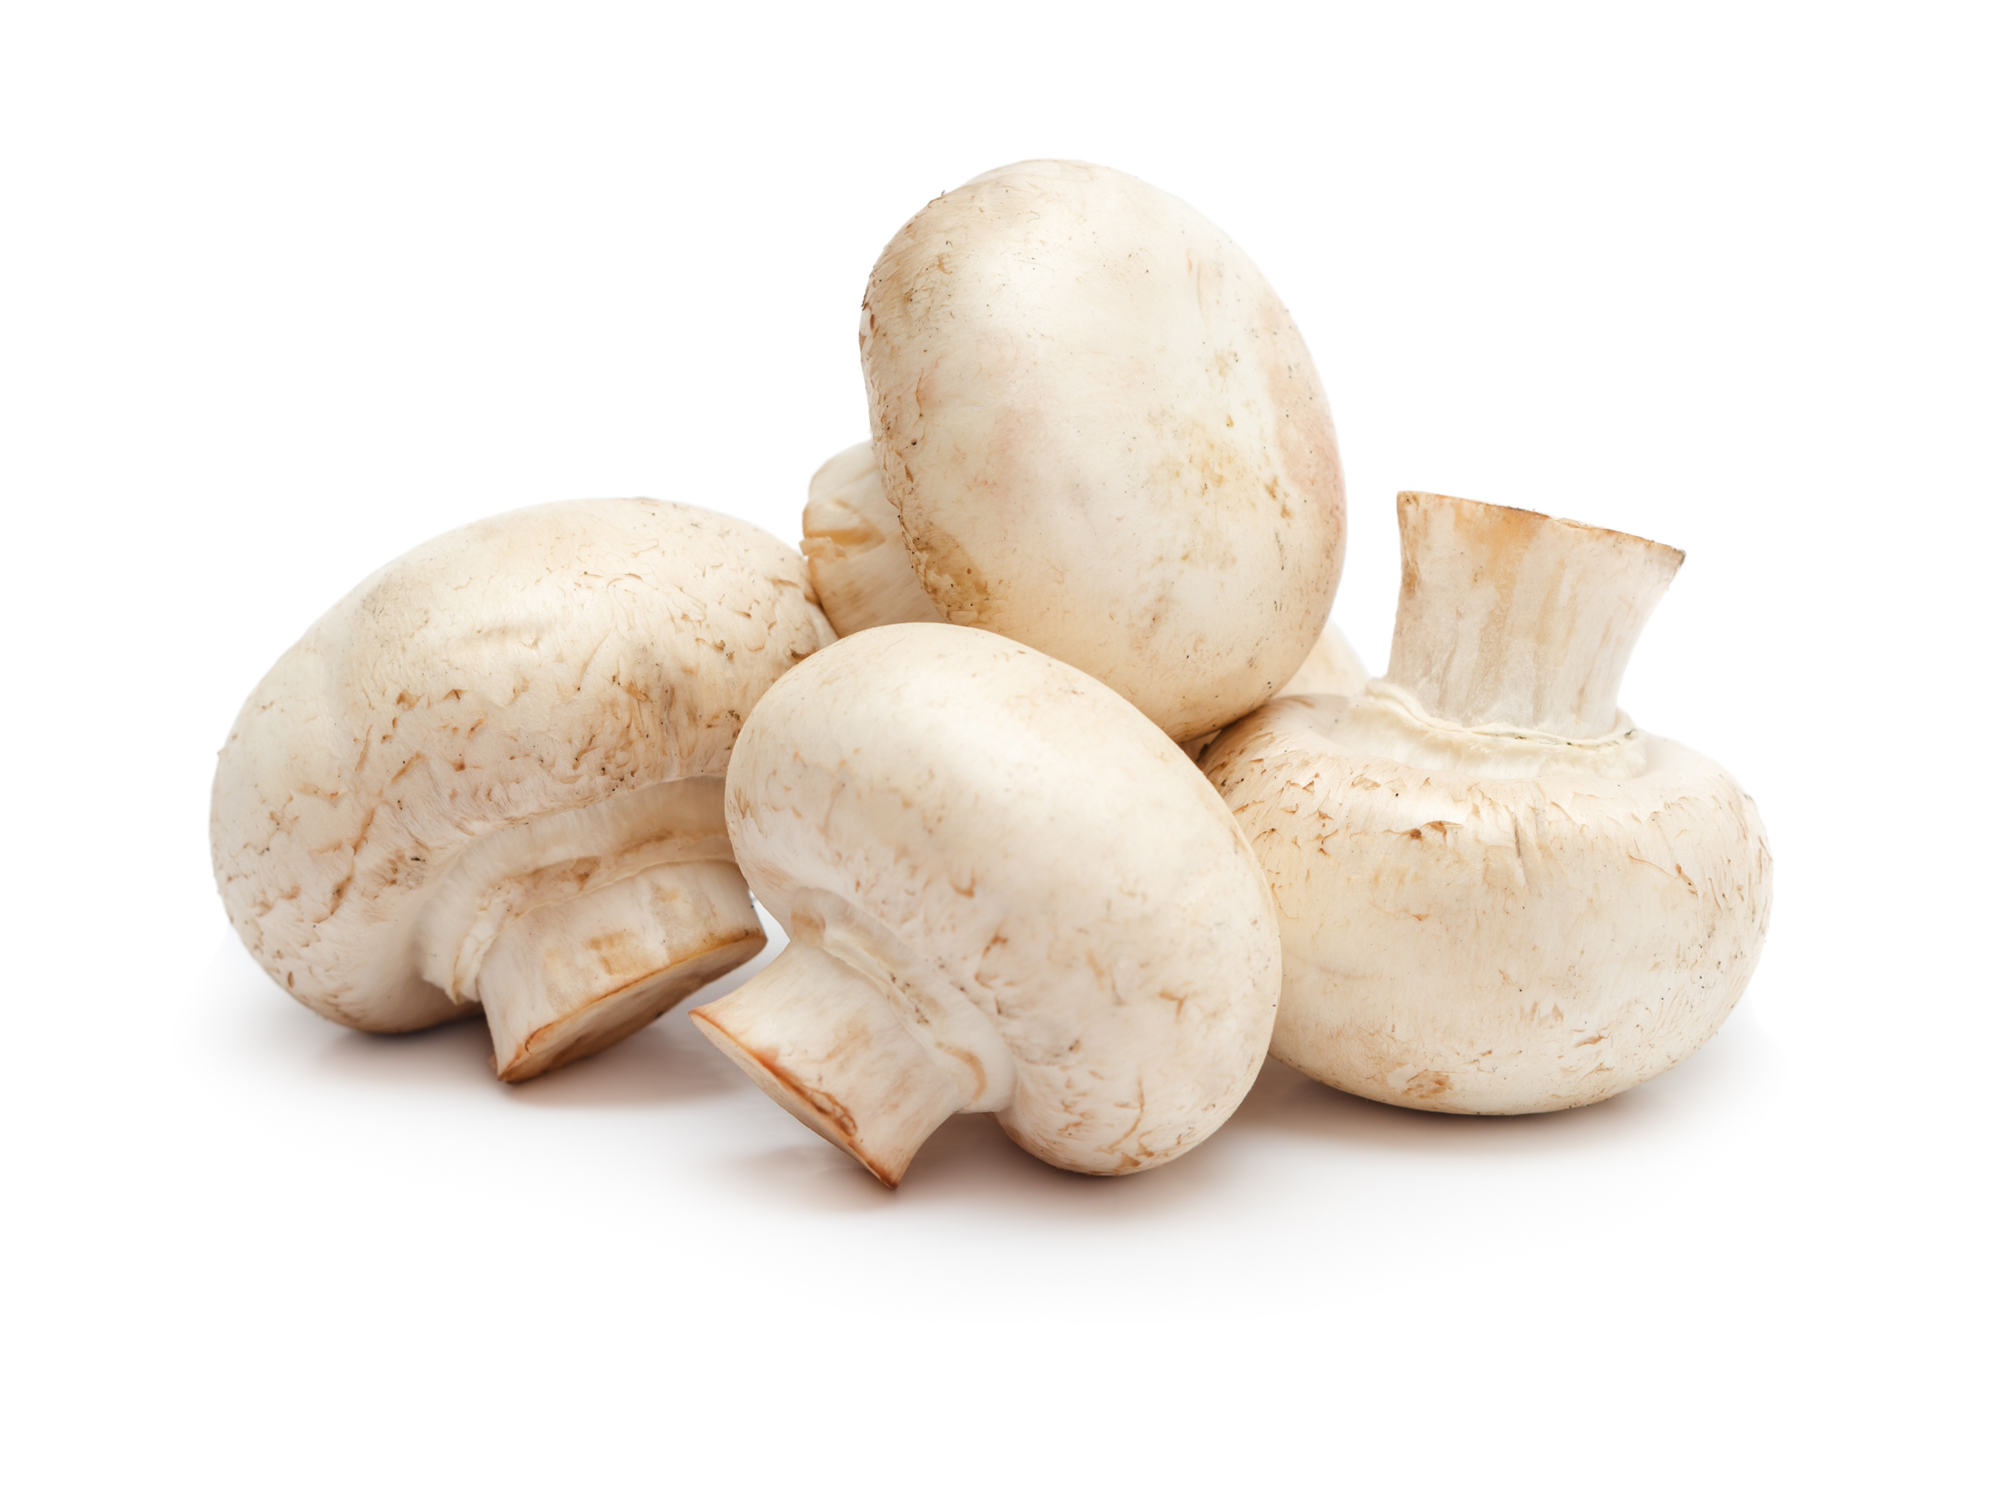 10+ ways mushrooms protect your body like nothing else